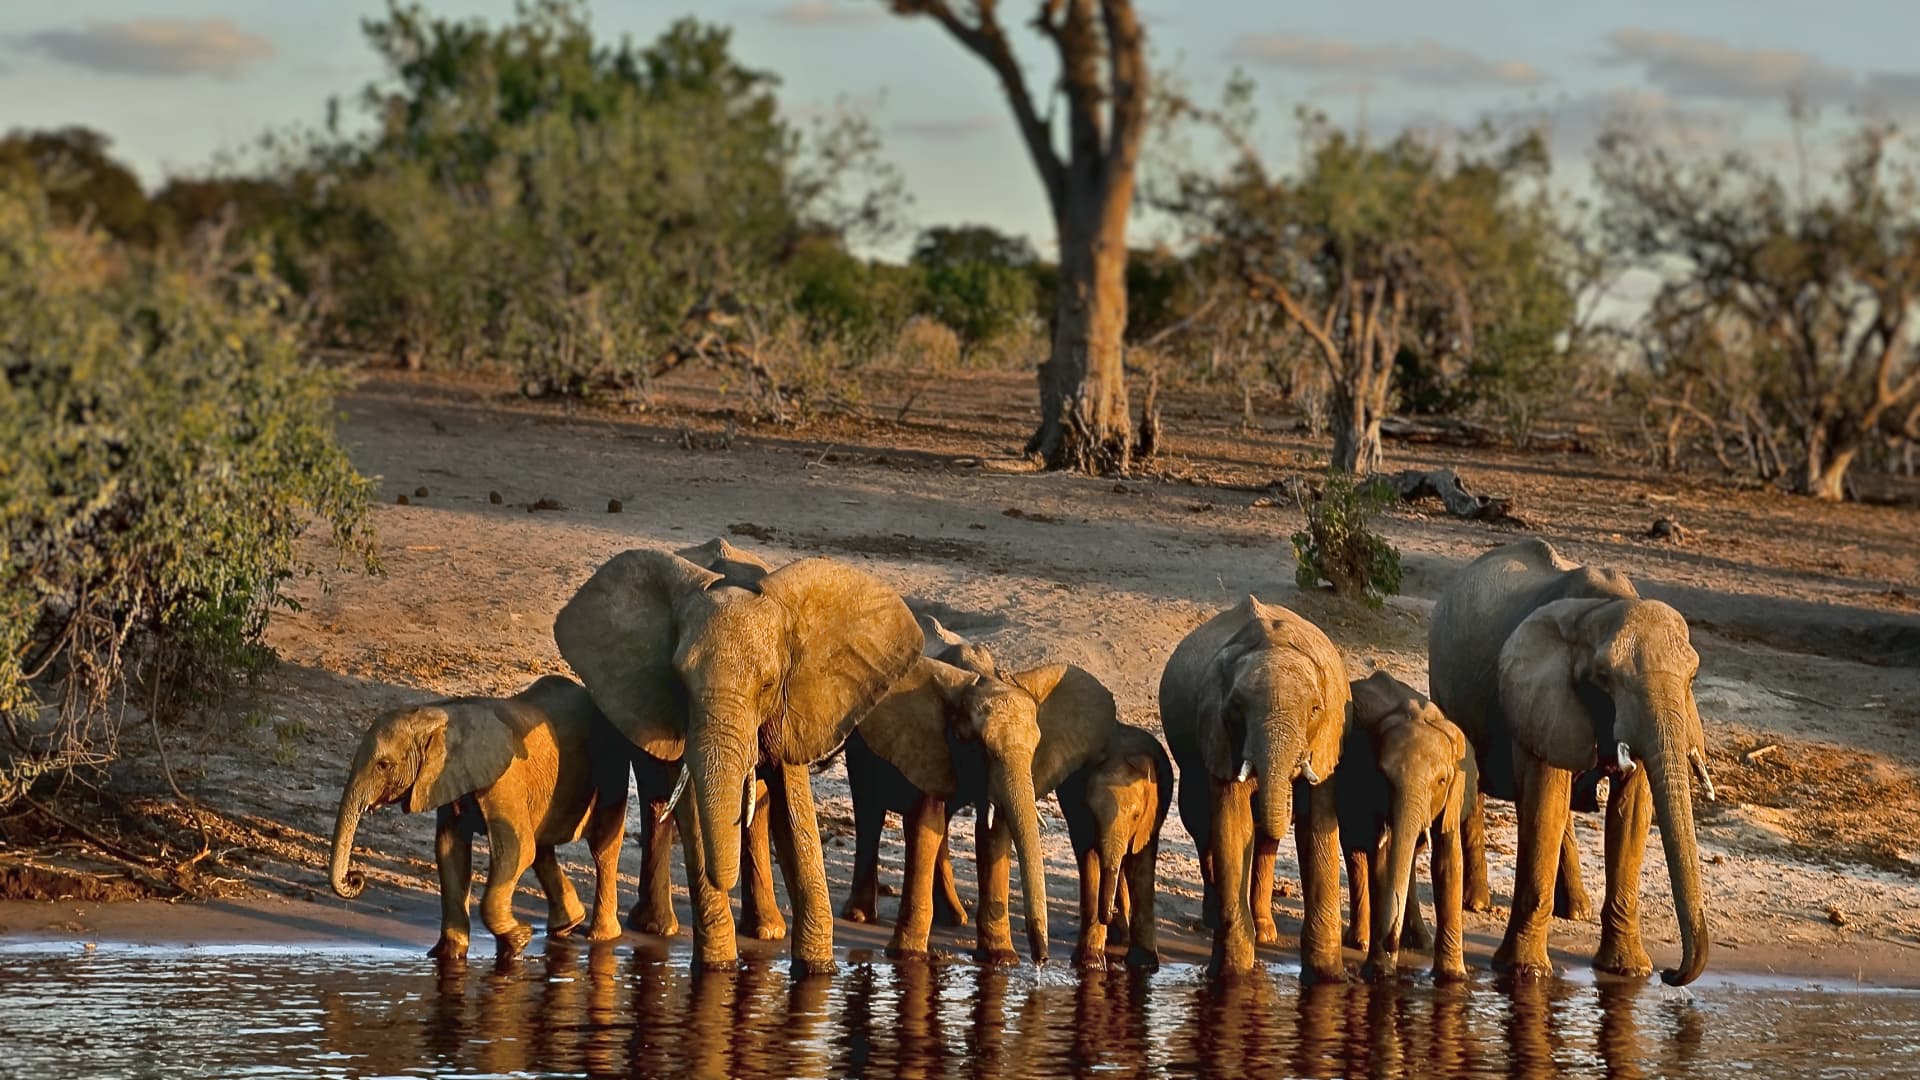 A herd of elephants at Chobe National Park, Botswana.